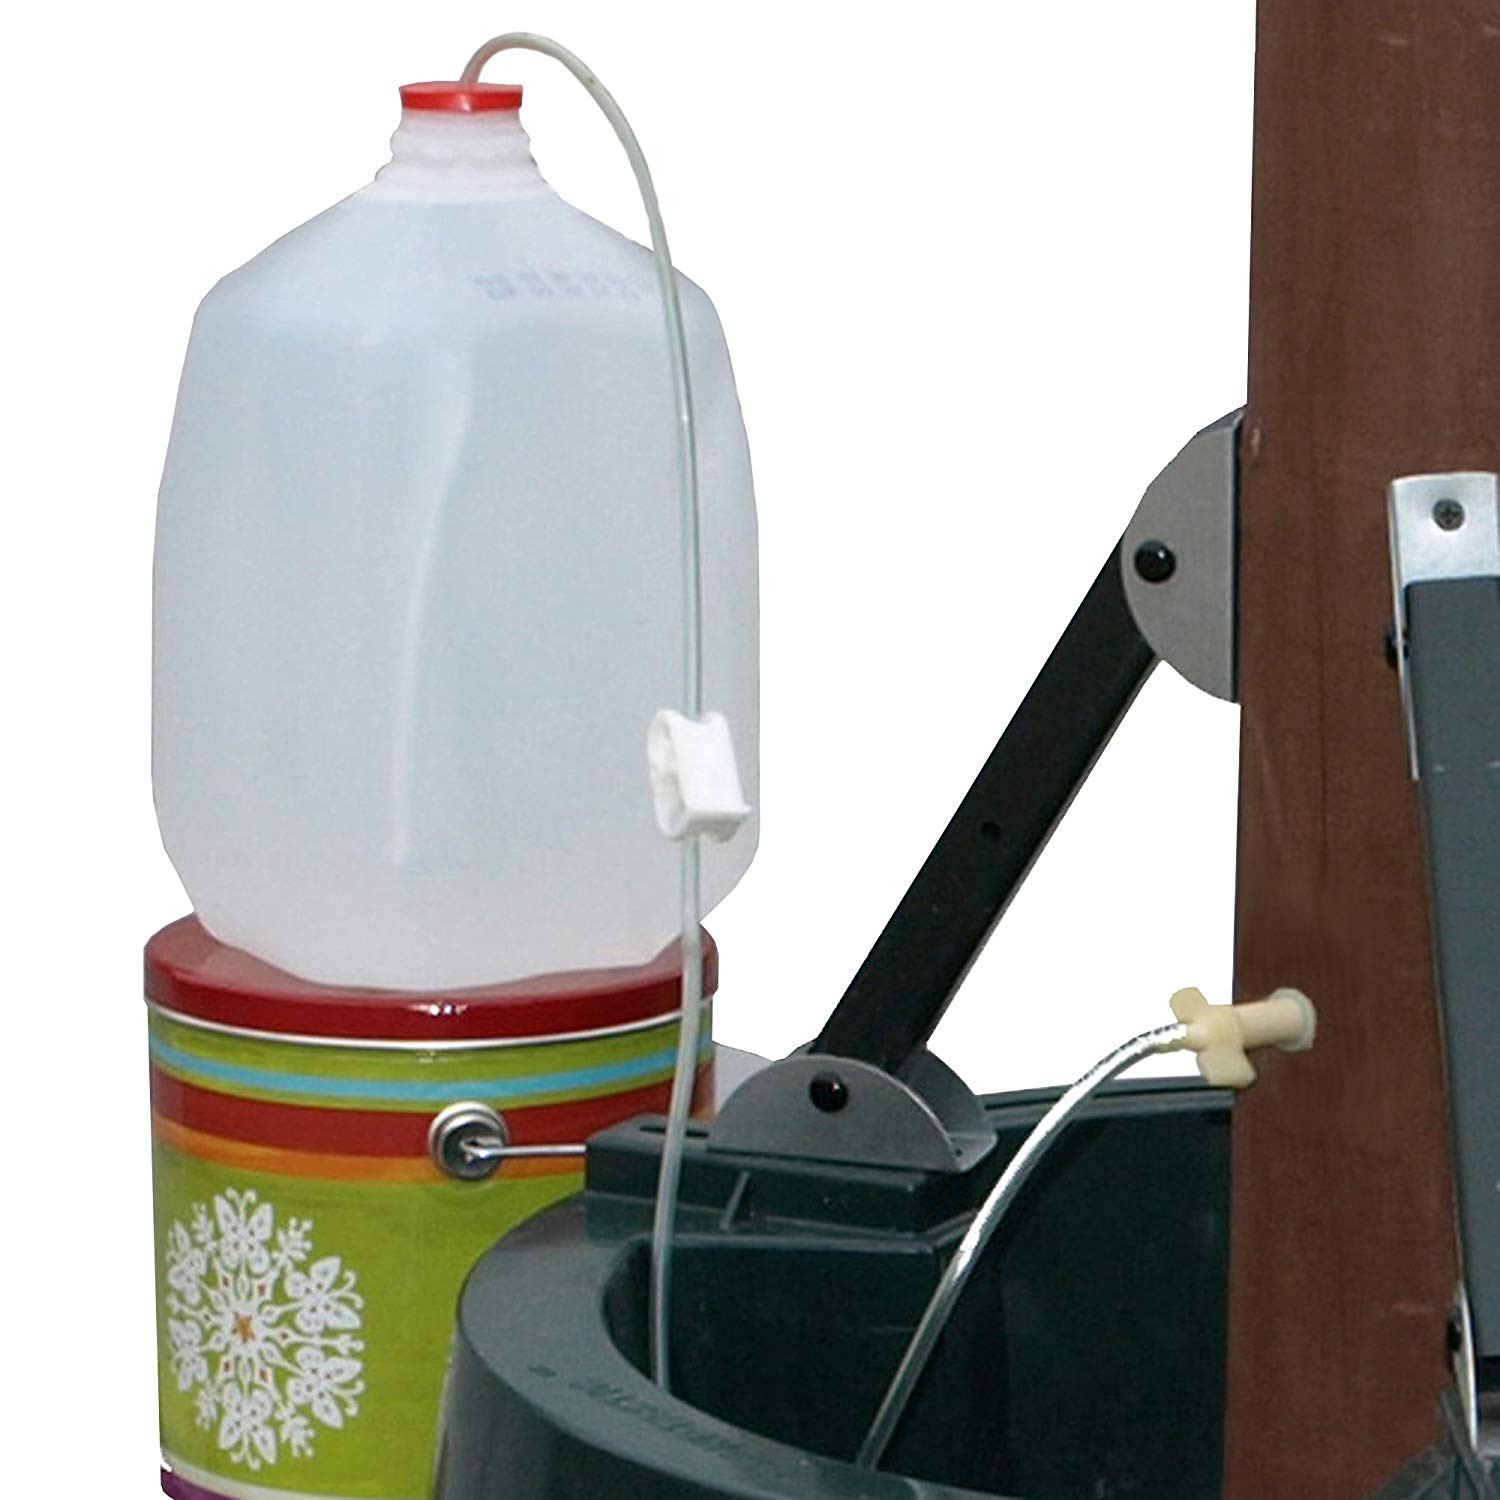 DIY Christmas Tree Watering System
 DIY Christmas Tree Watering System Michael King